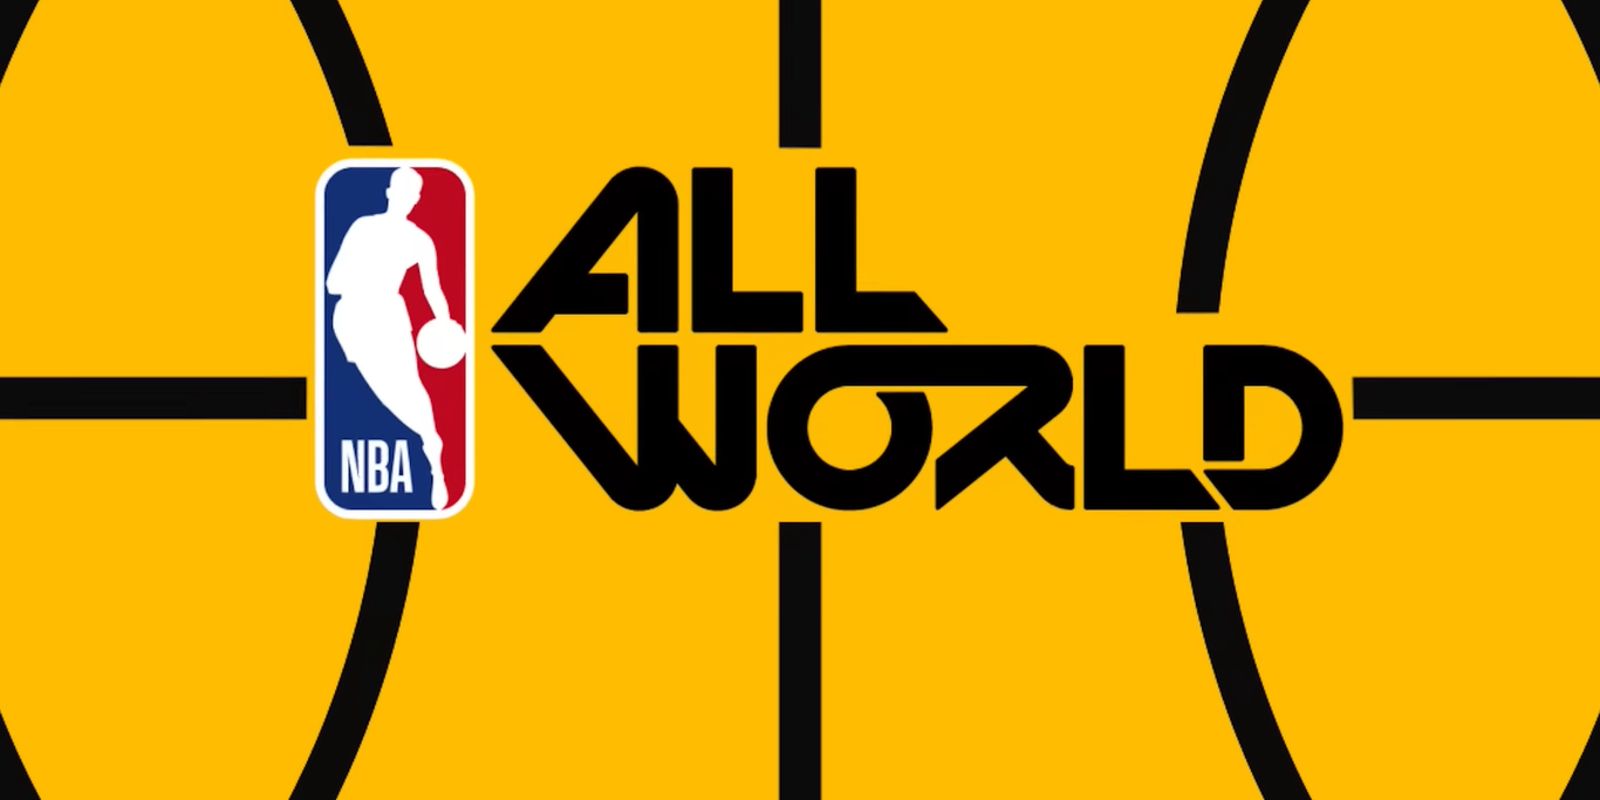 NBA All-World Graphic